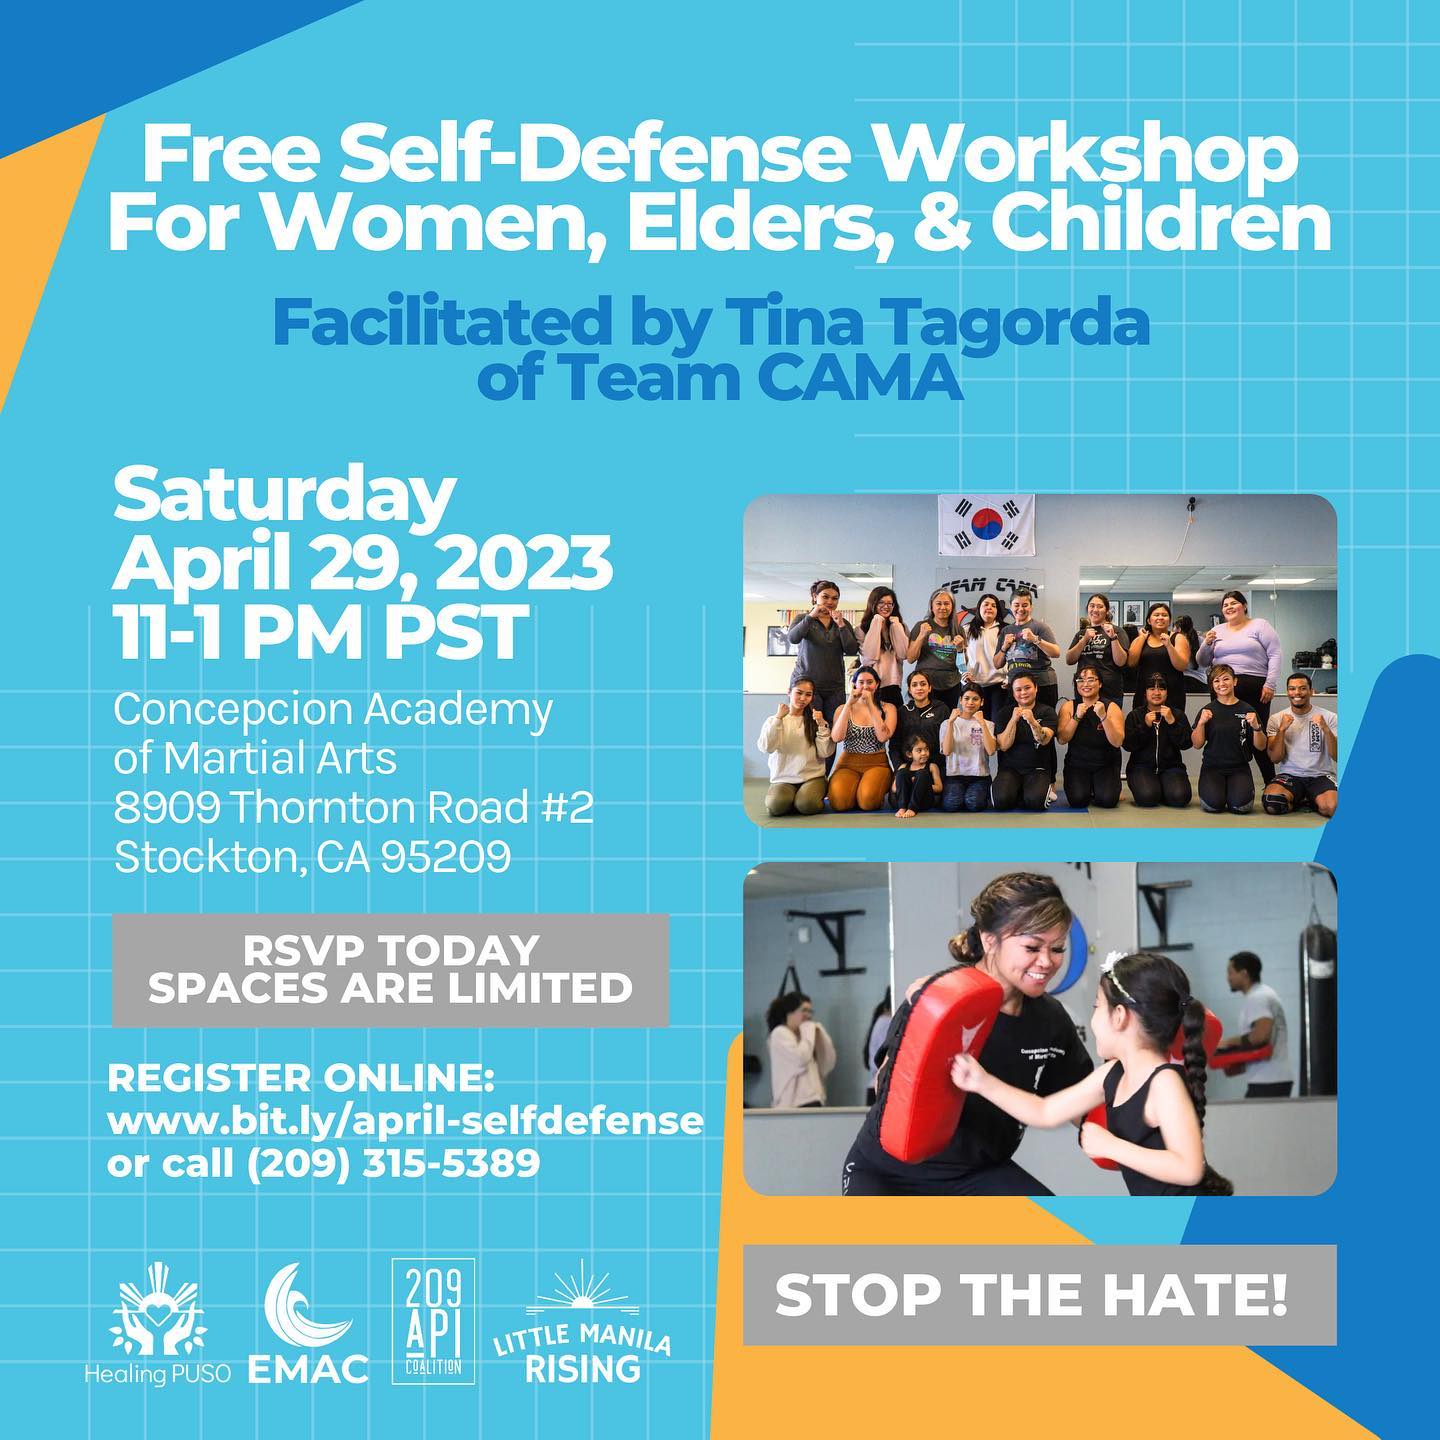 FREE self-defense workshop hosted by Tina Tagorda